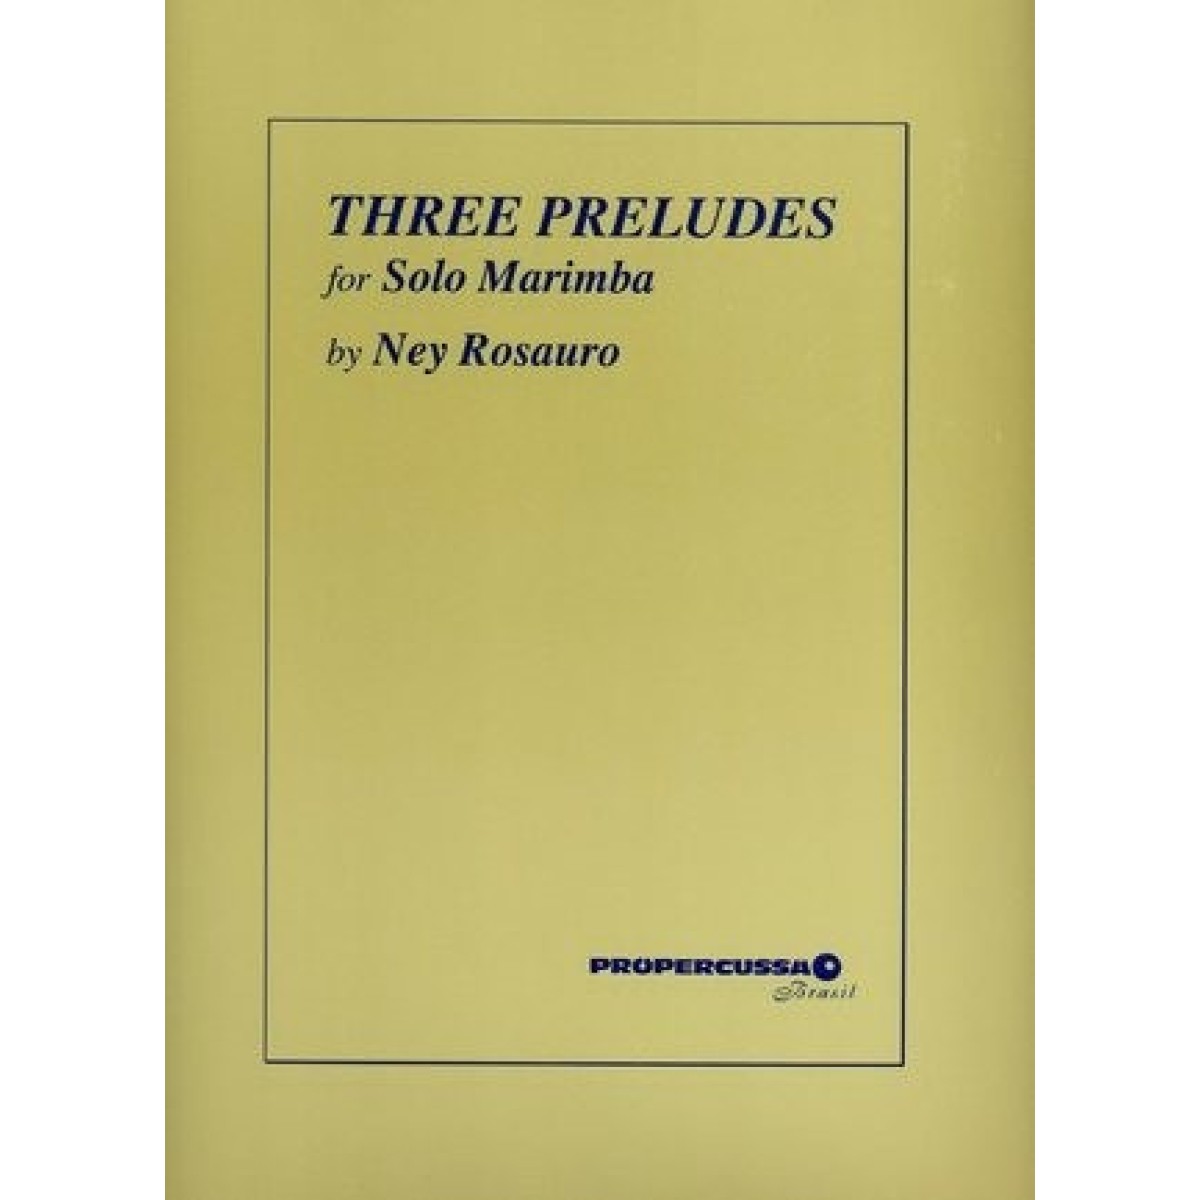 Three Preludes For Solo Marimba by Ney Rosauro